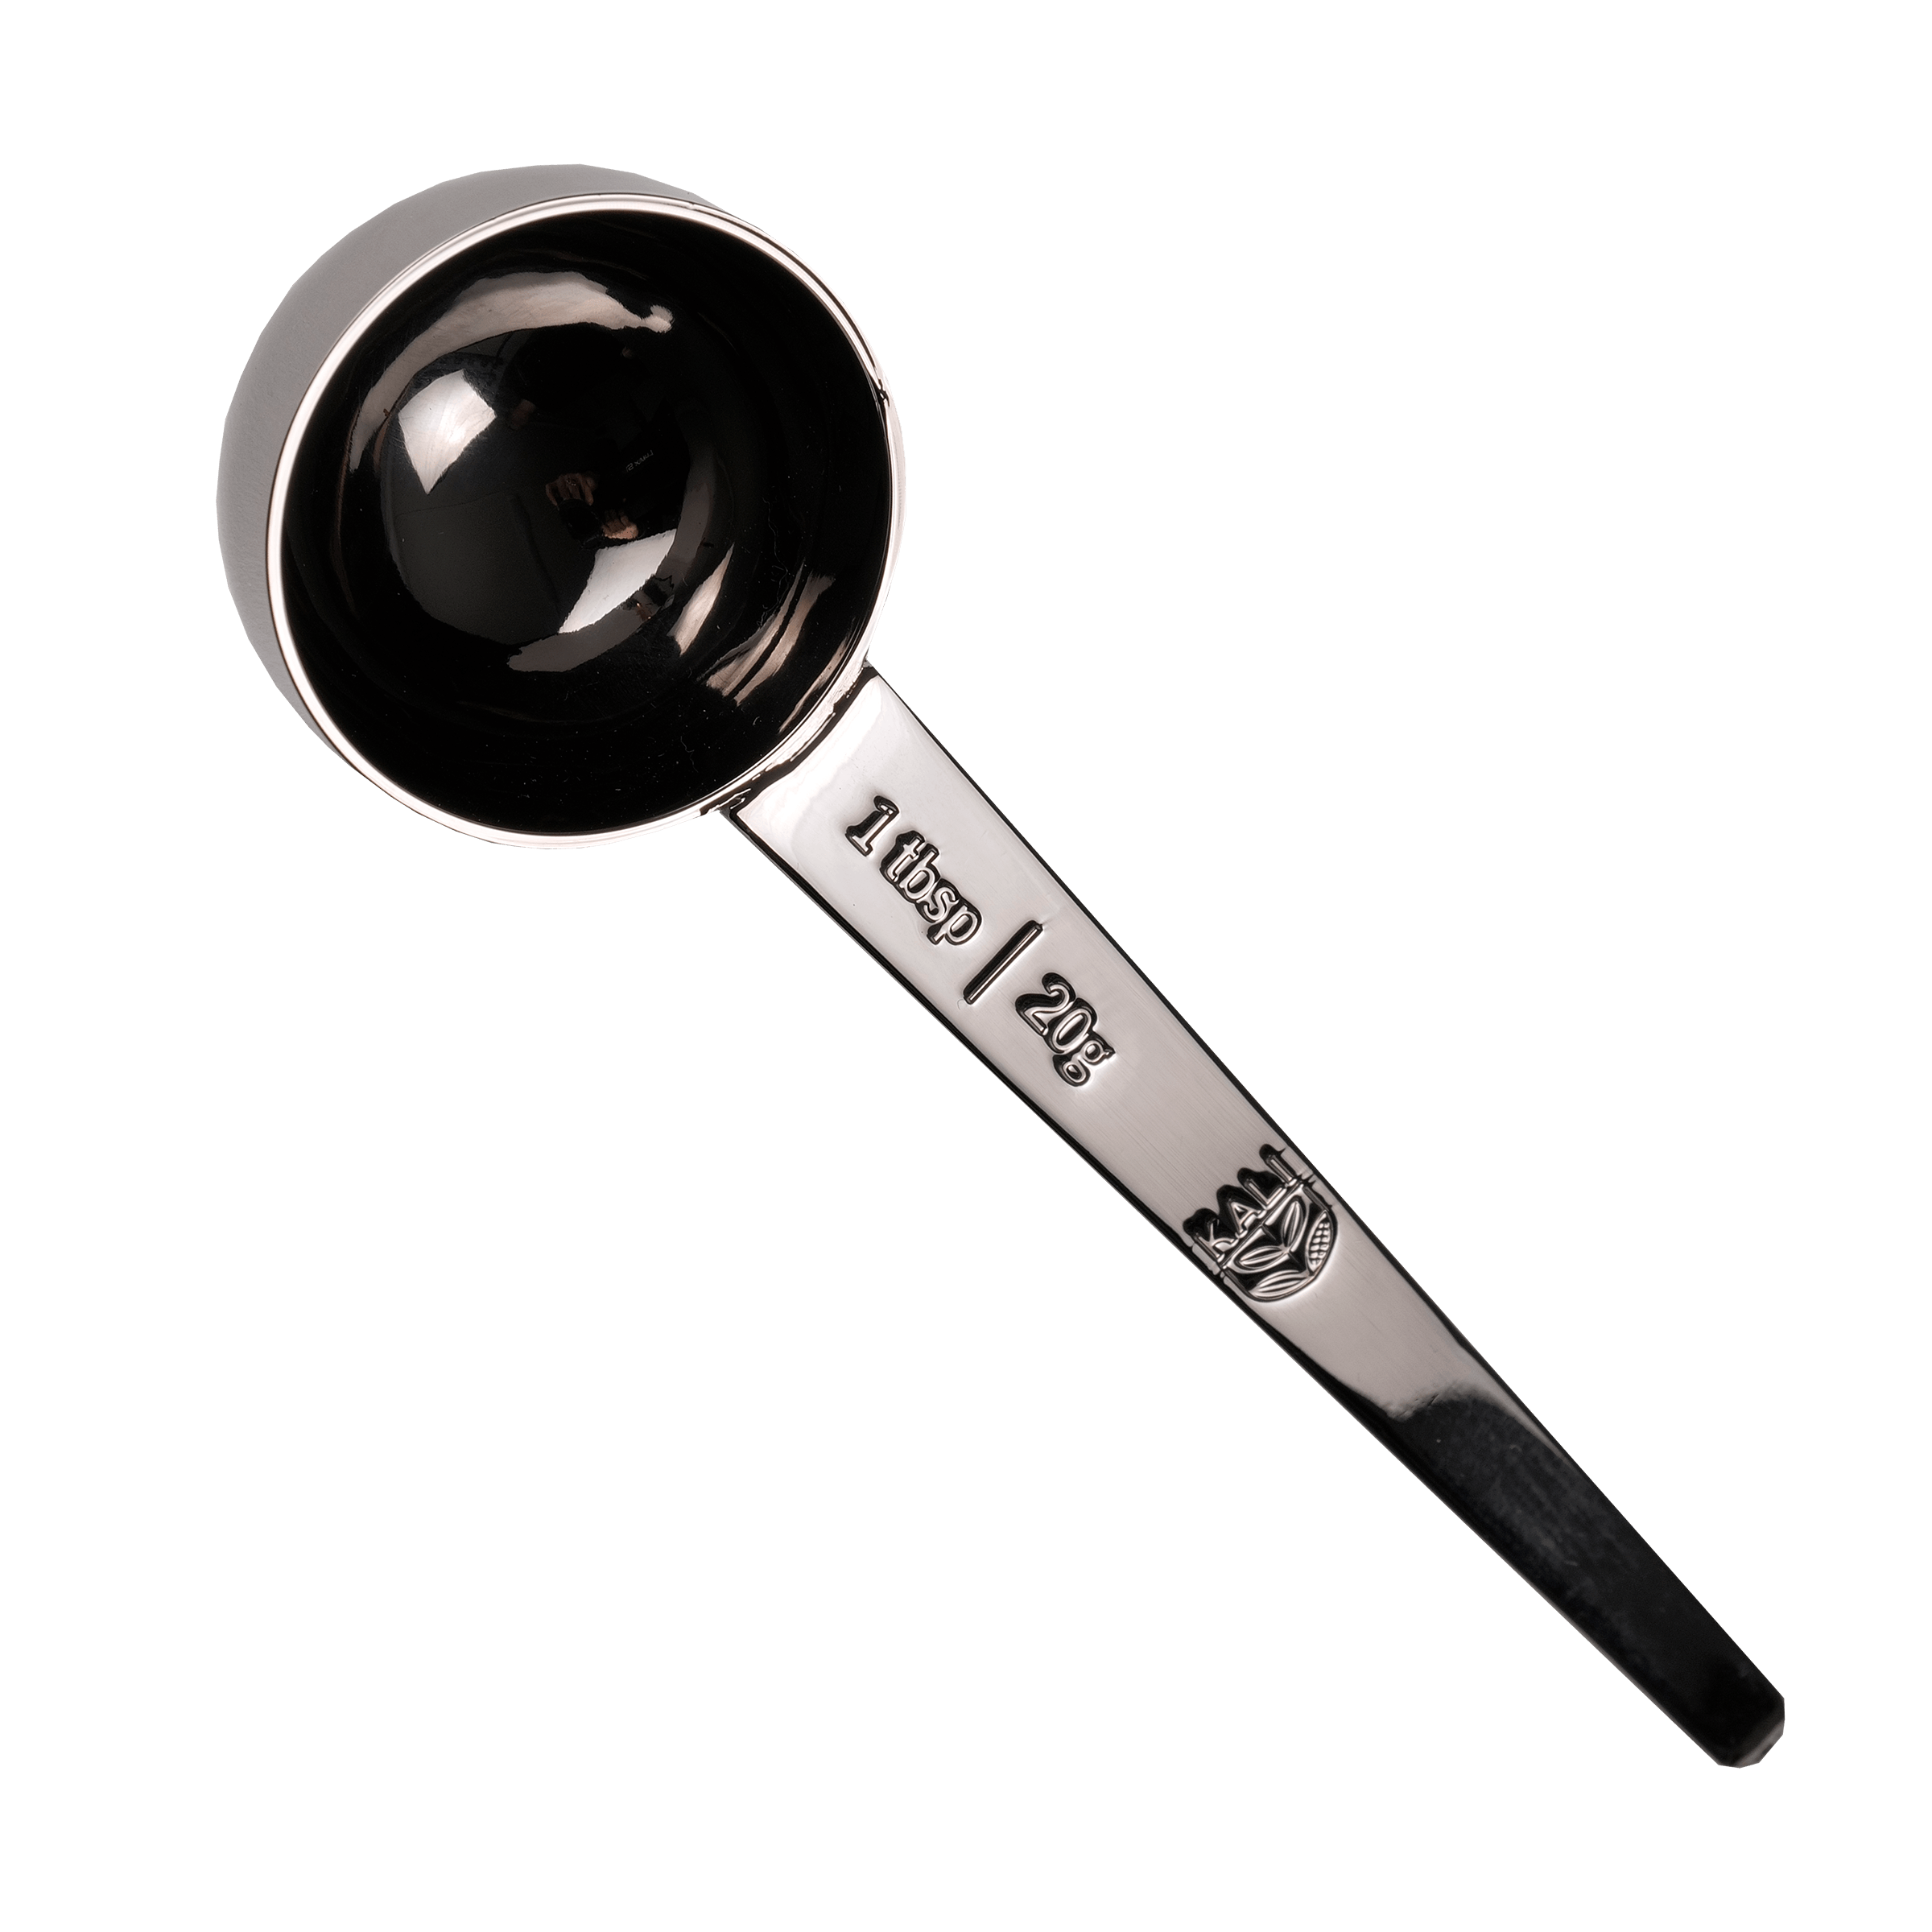 Kali Chocolate Barista Spoon